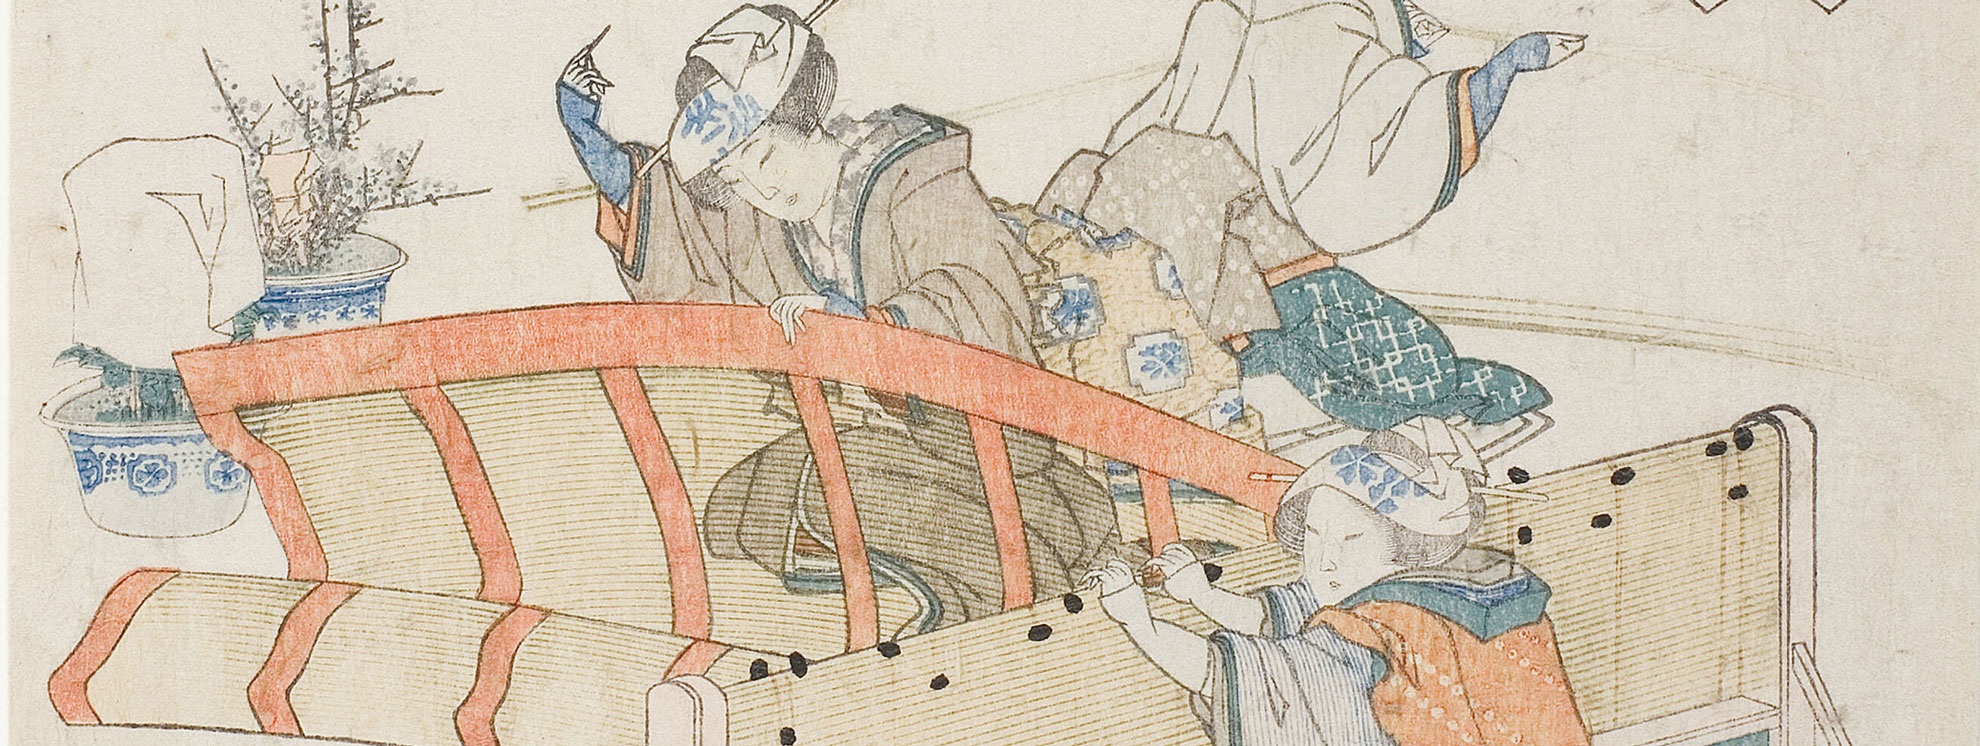 Katsushika Hokusai - Making Bamboo Blinds (Detail) - 1816-1833. The Art Institute of Chicago.